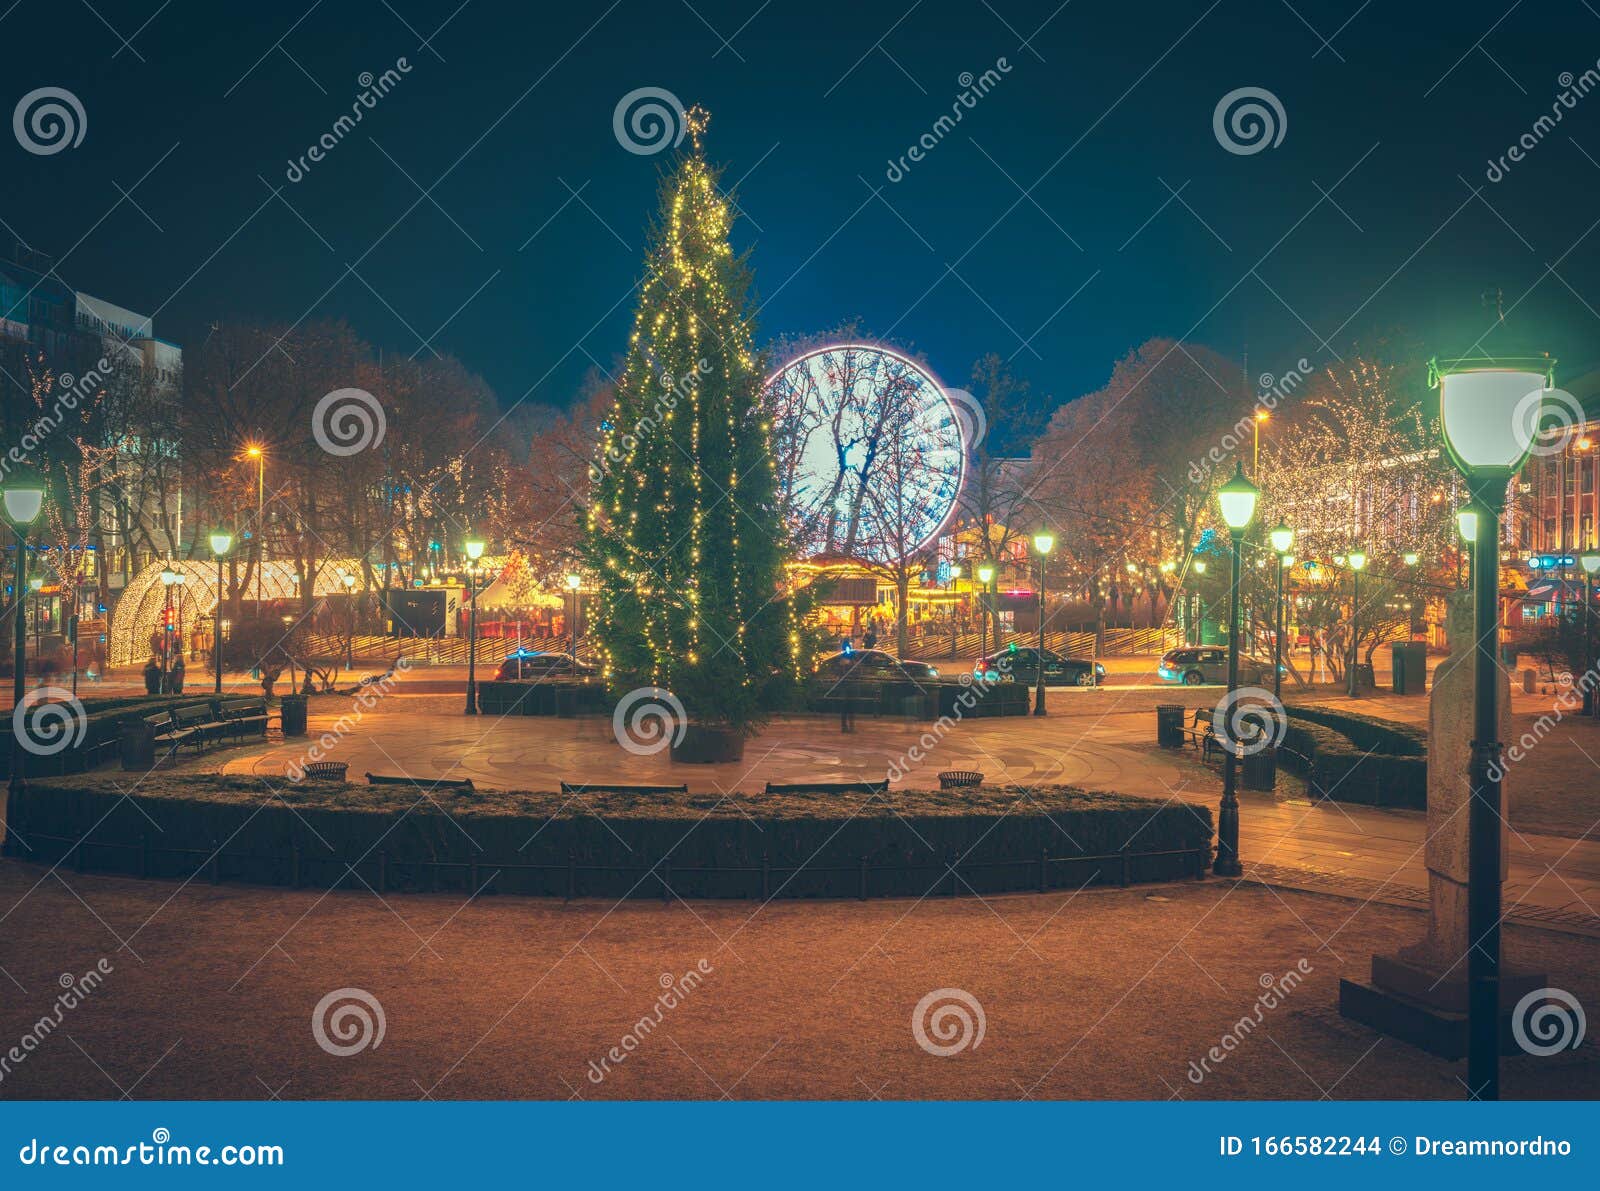 noregian capilal city oslo at christmas night, europe, sscandinavia